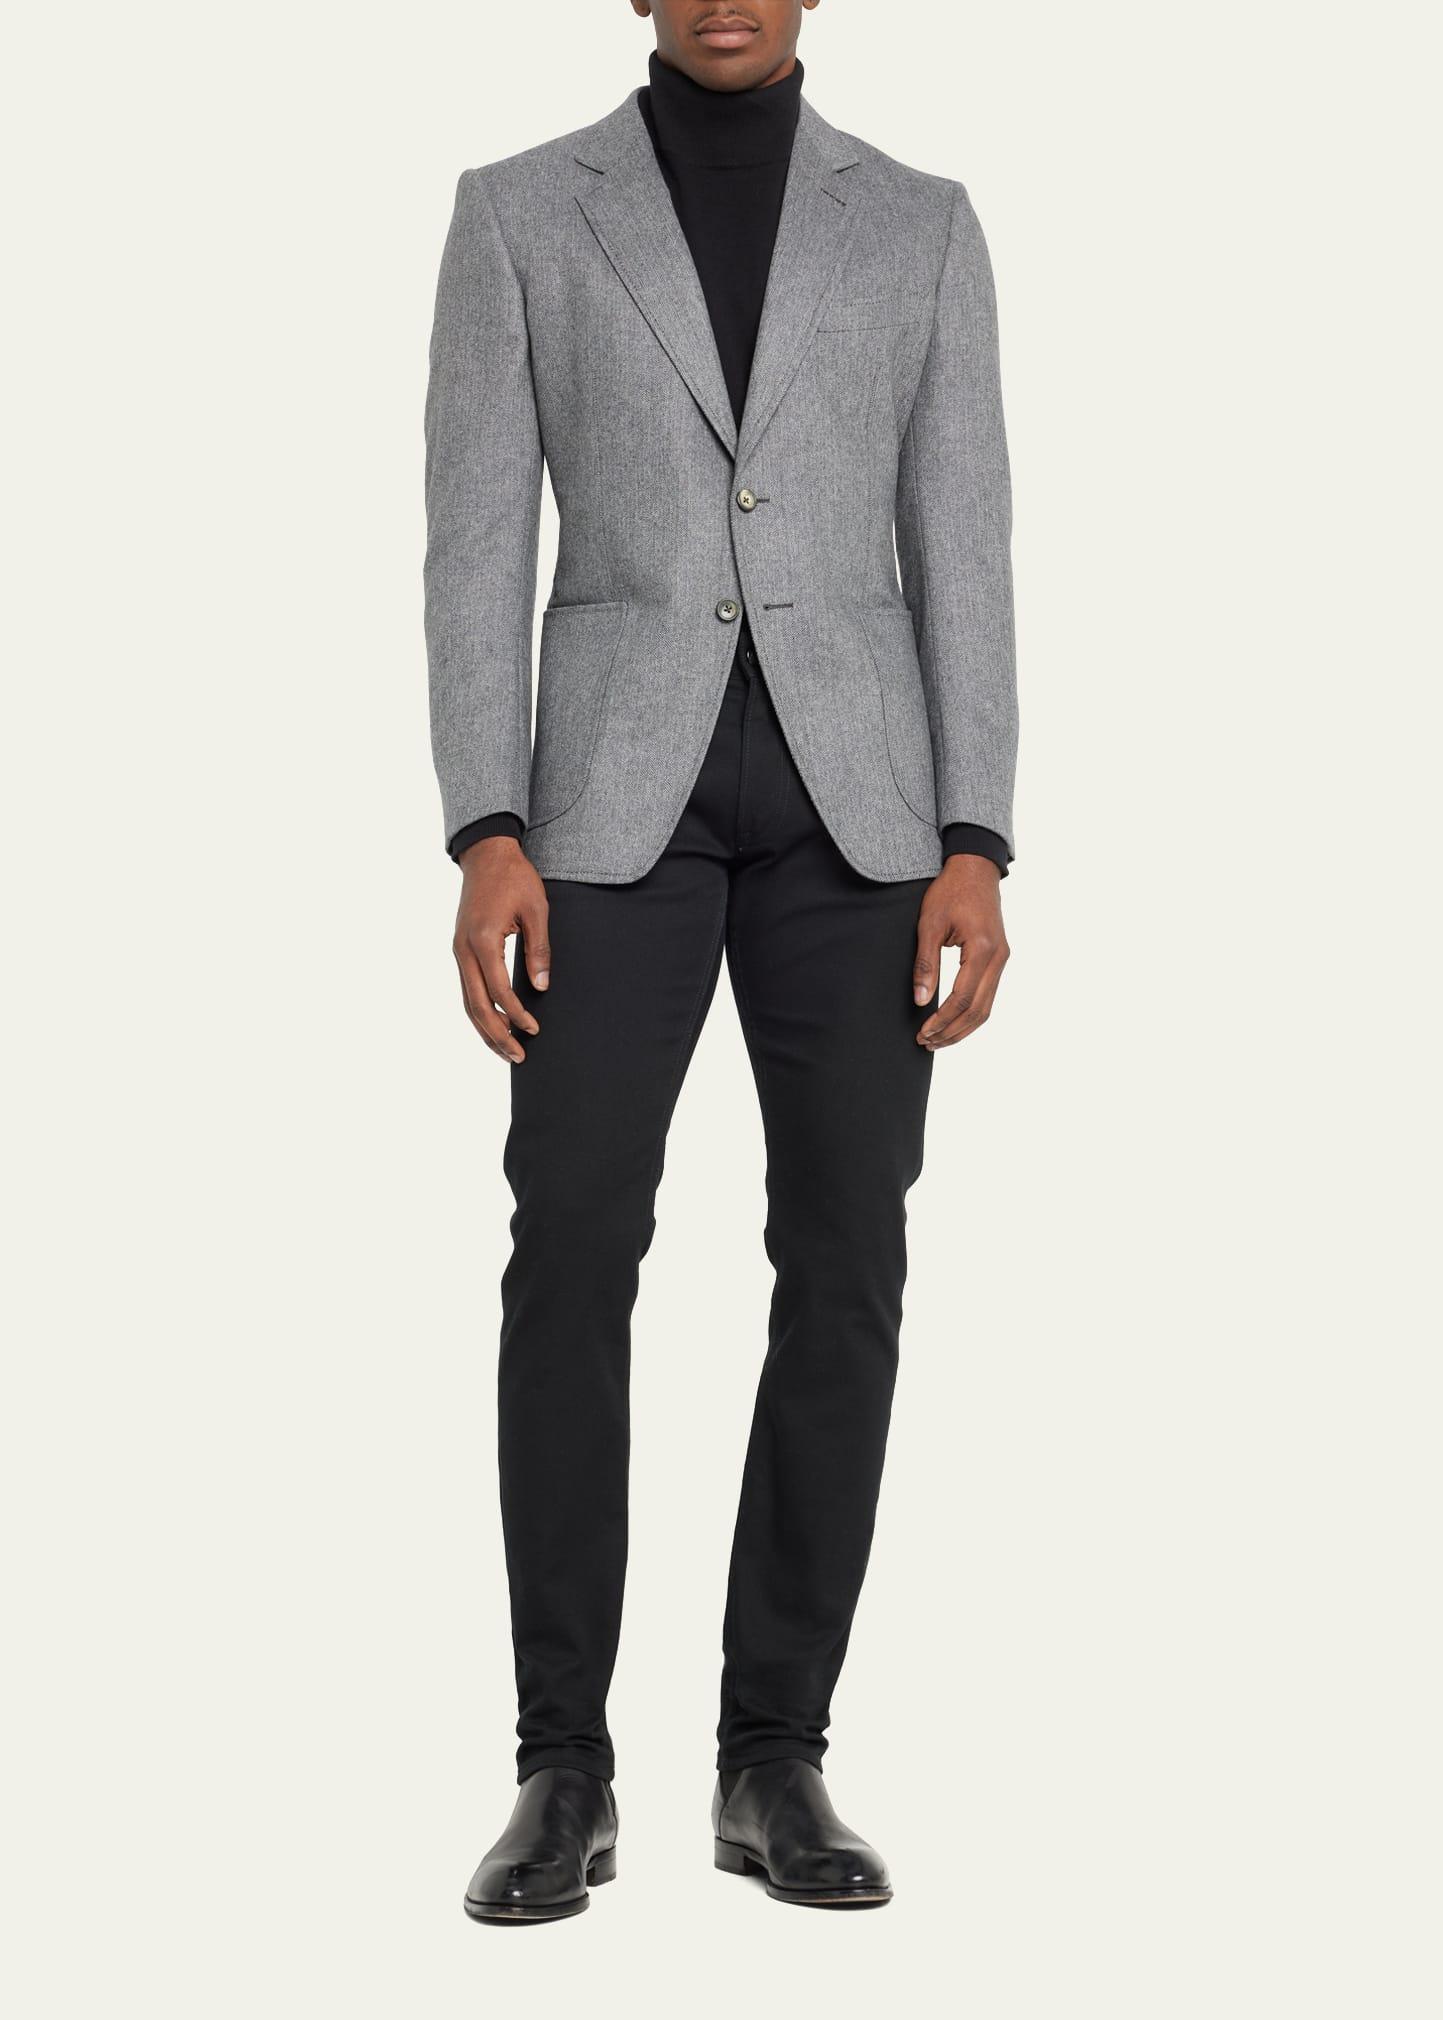 Tom Ford Herringbone Wool-cashmere Sport Coat in Gray for Men | Lyst